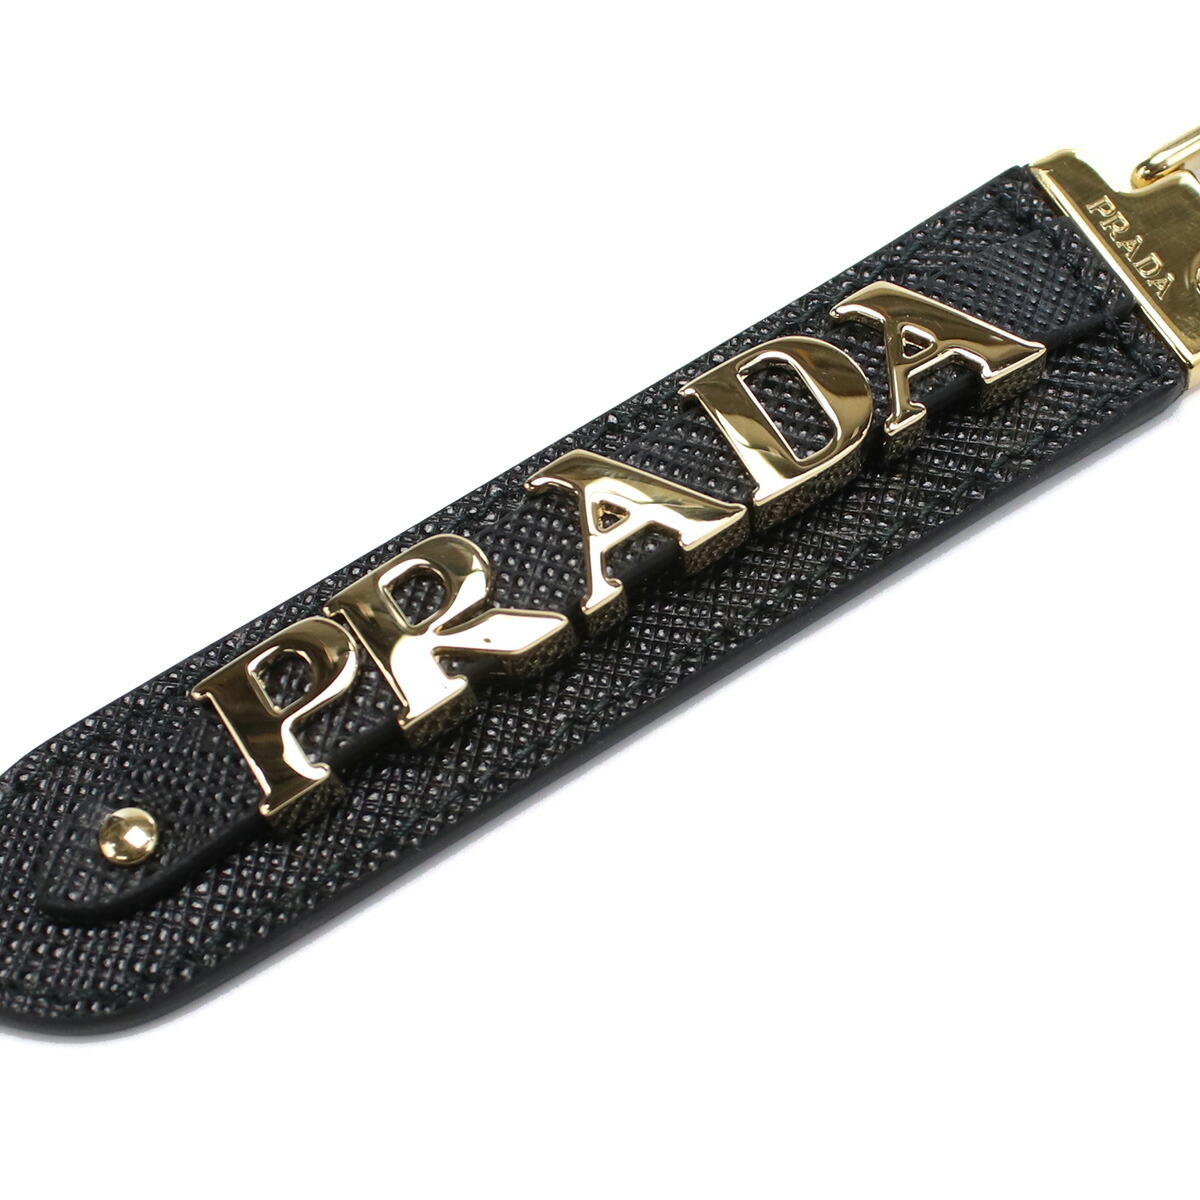  Prada PRADA key ring brand safia-no1PP067 053 F0002 NERO black 